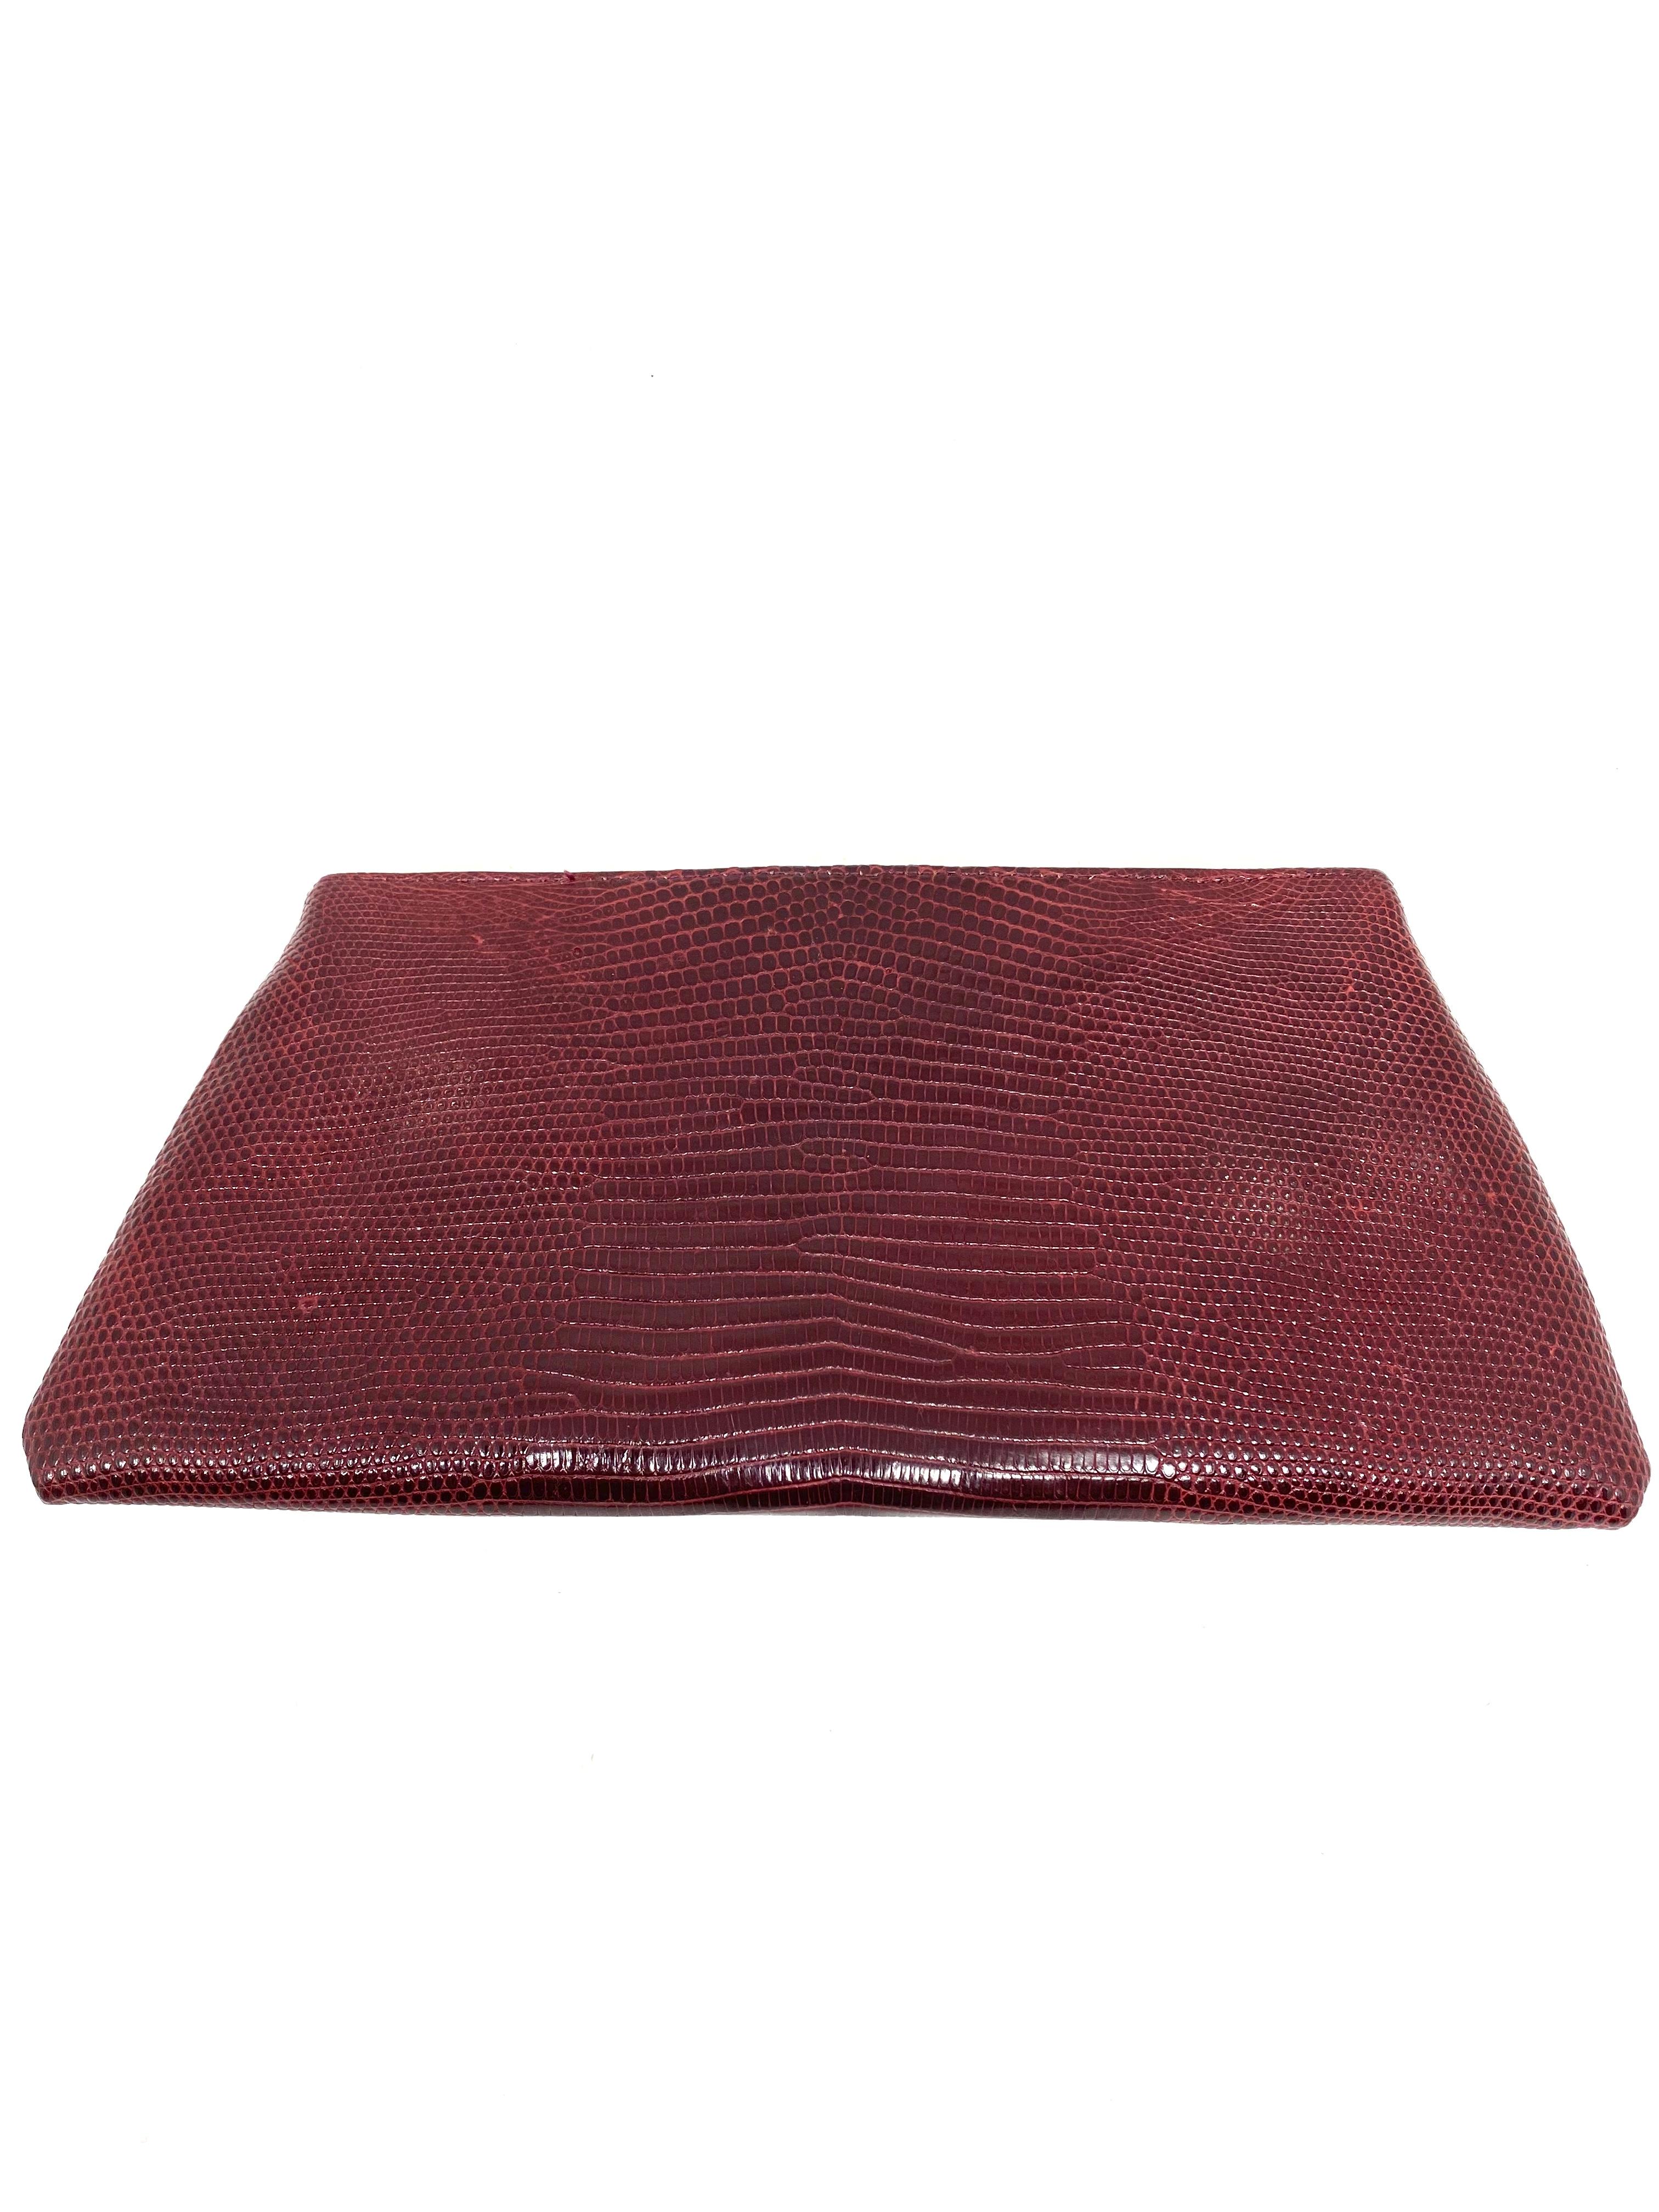 Vintage Brigette Romanek Red Lizard Leather Clutch Evening Purse For Sale 1